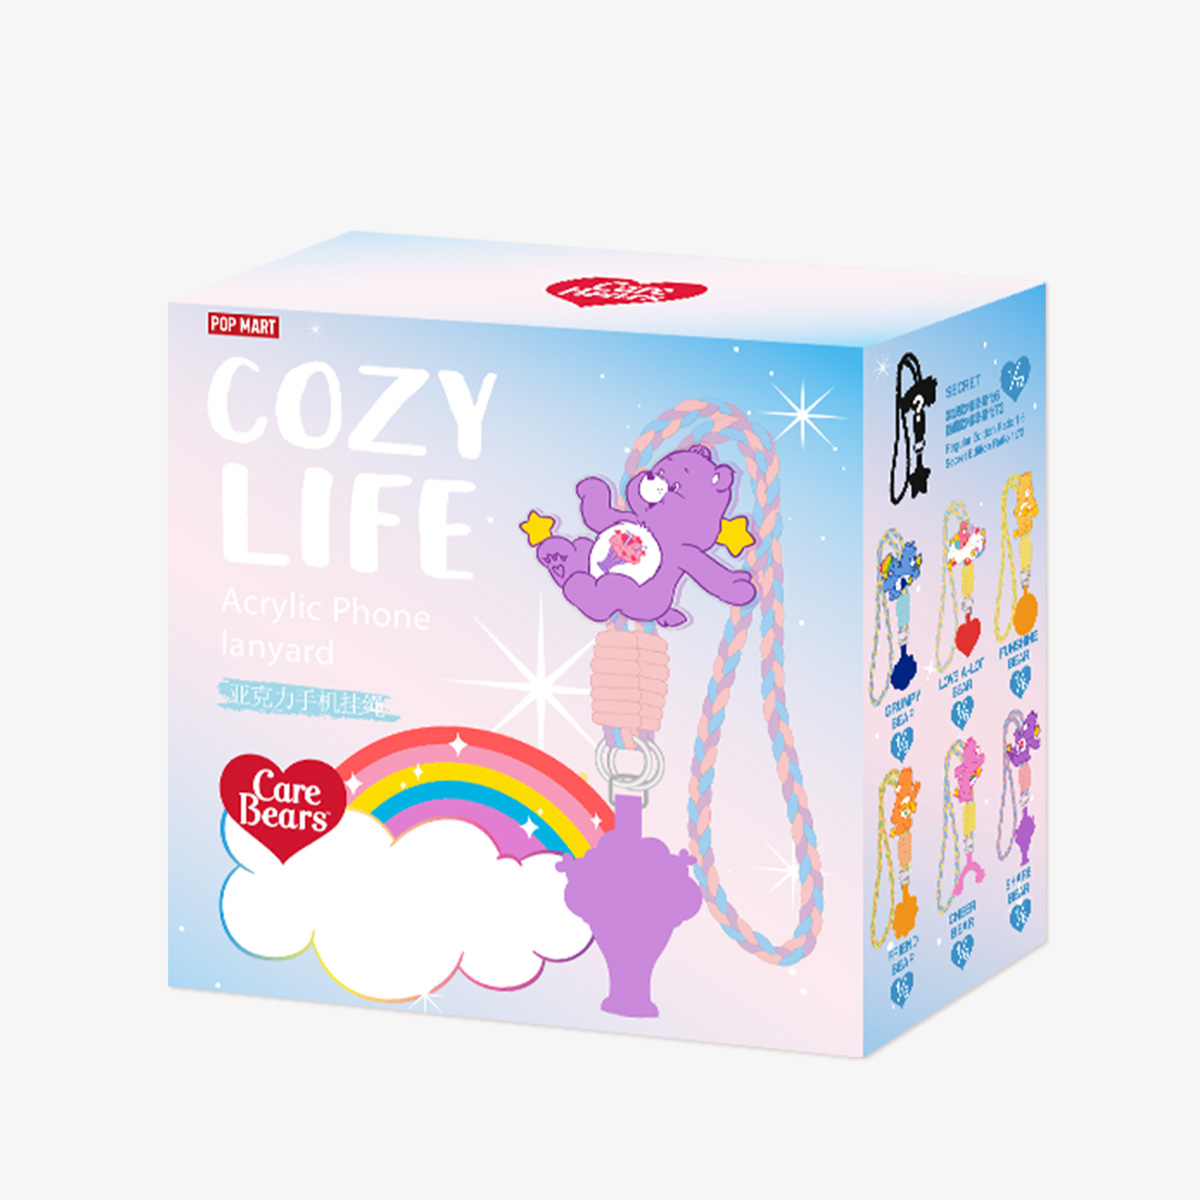 Care Bears Cozy Life Series-Acrylic Phone Lanyard Blind Box - POP 